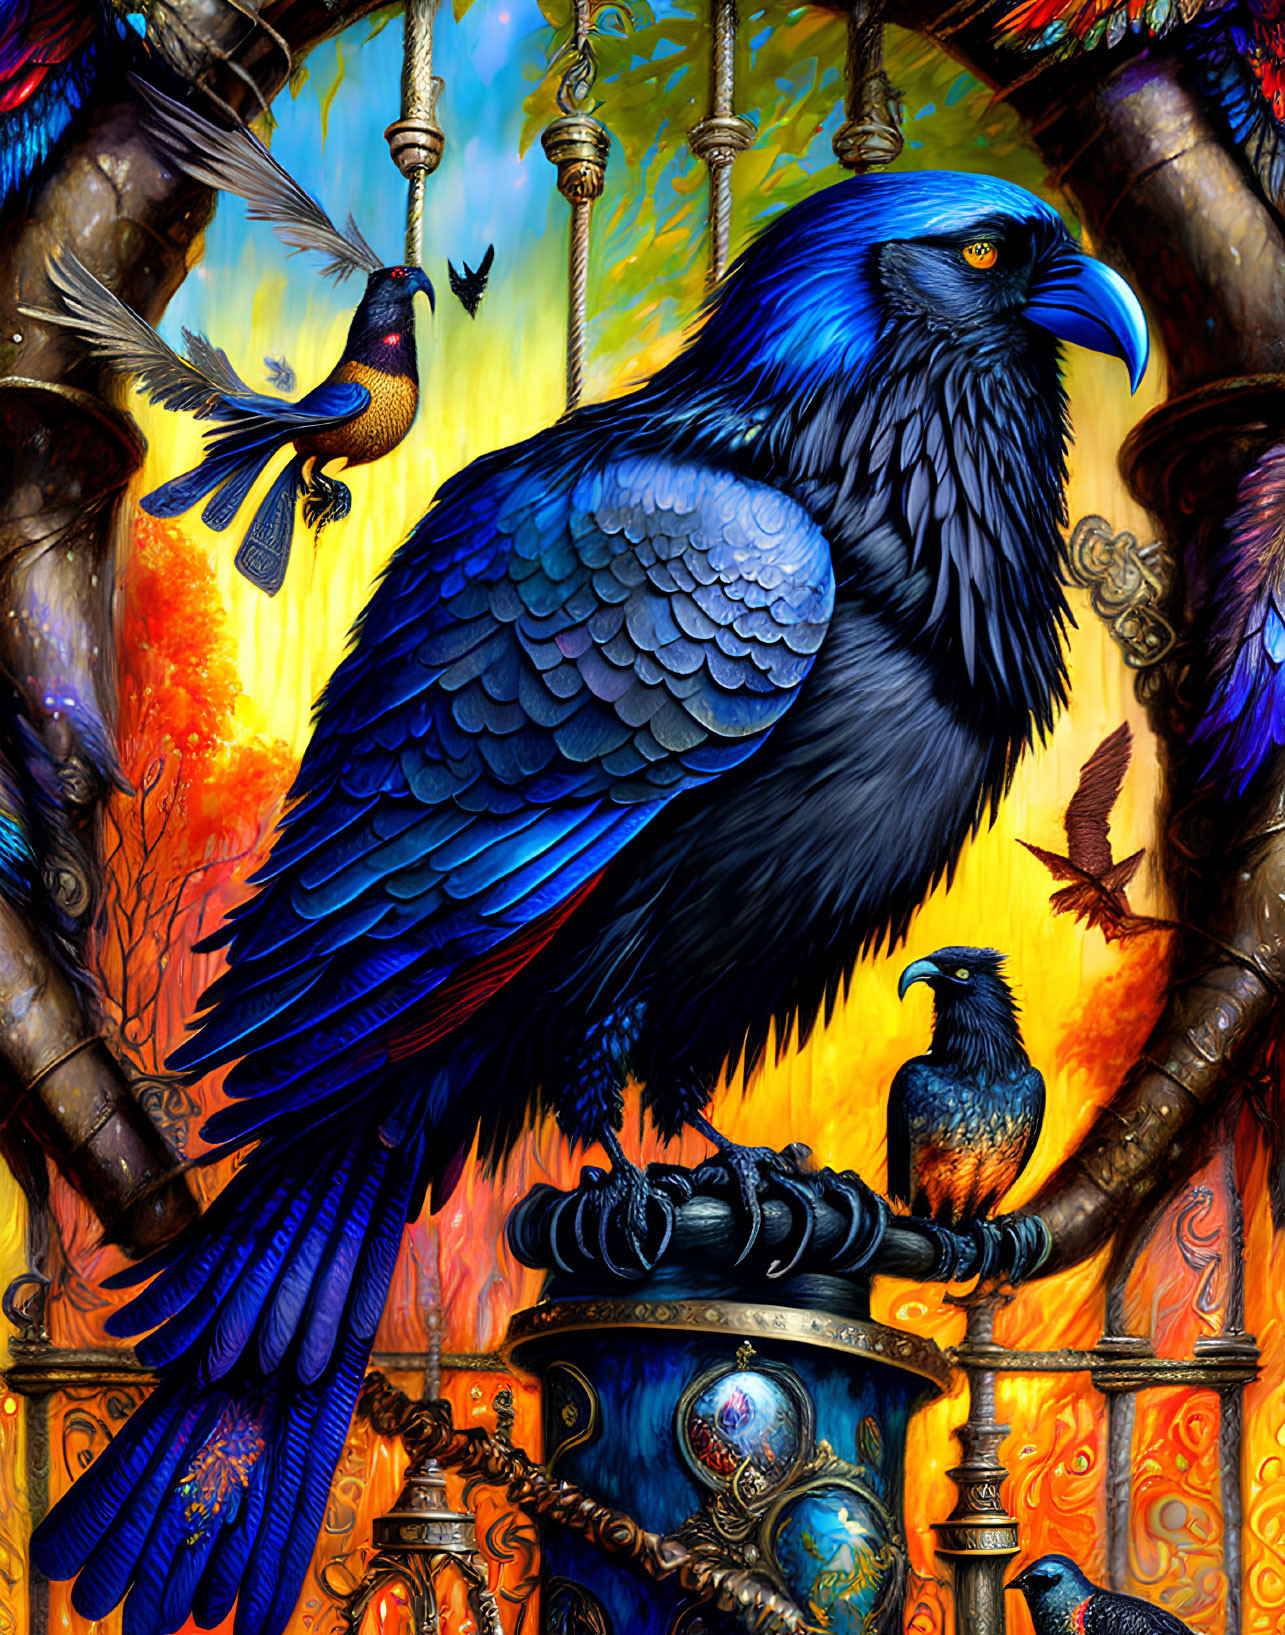 Detailed illustration of majestic raven among ornate pillars